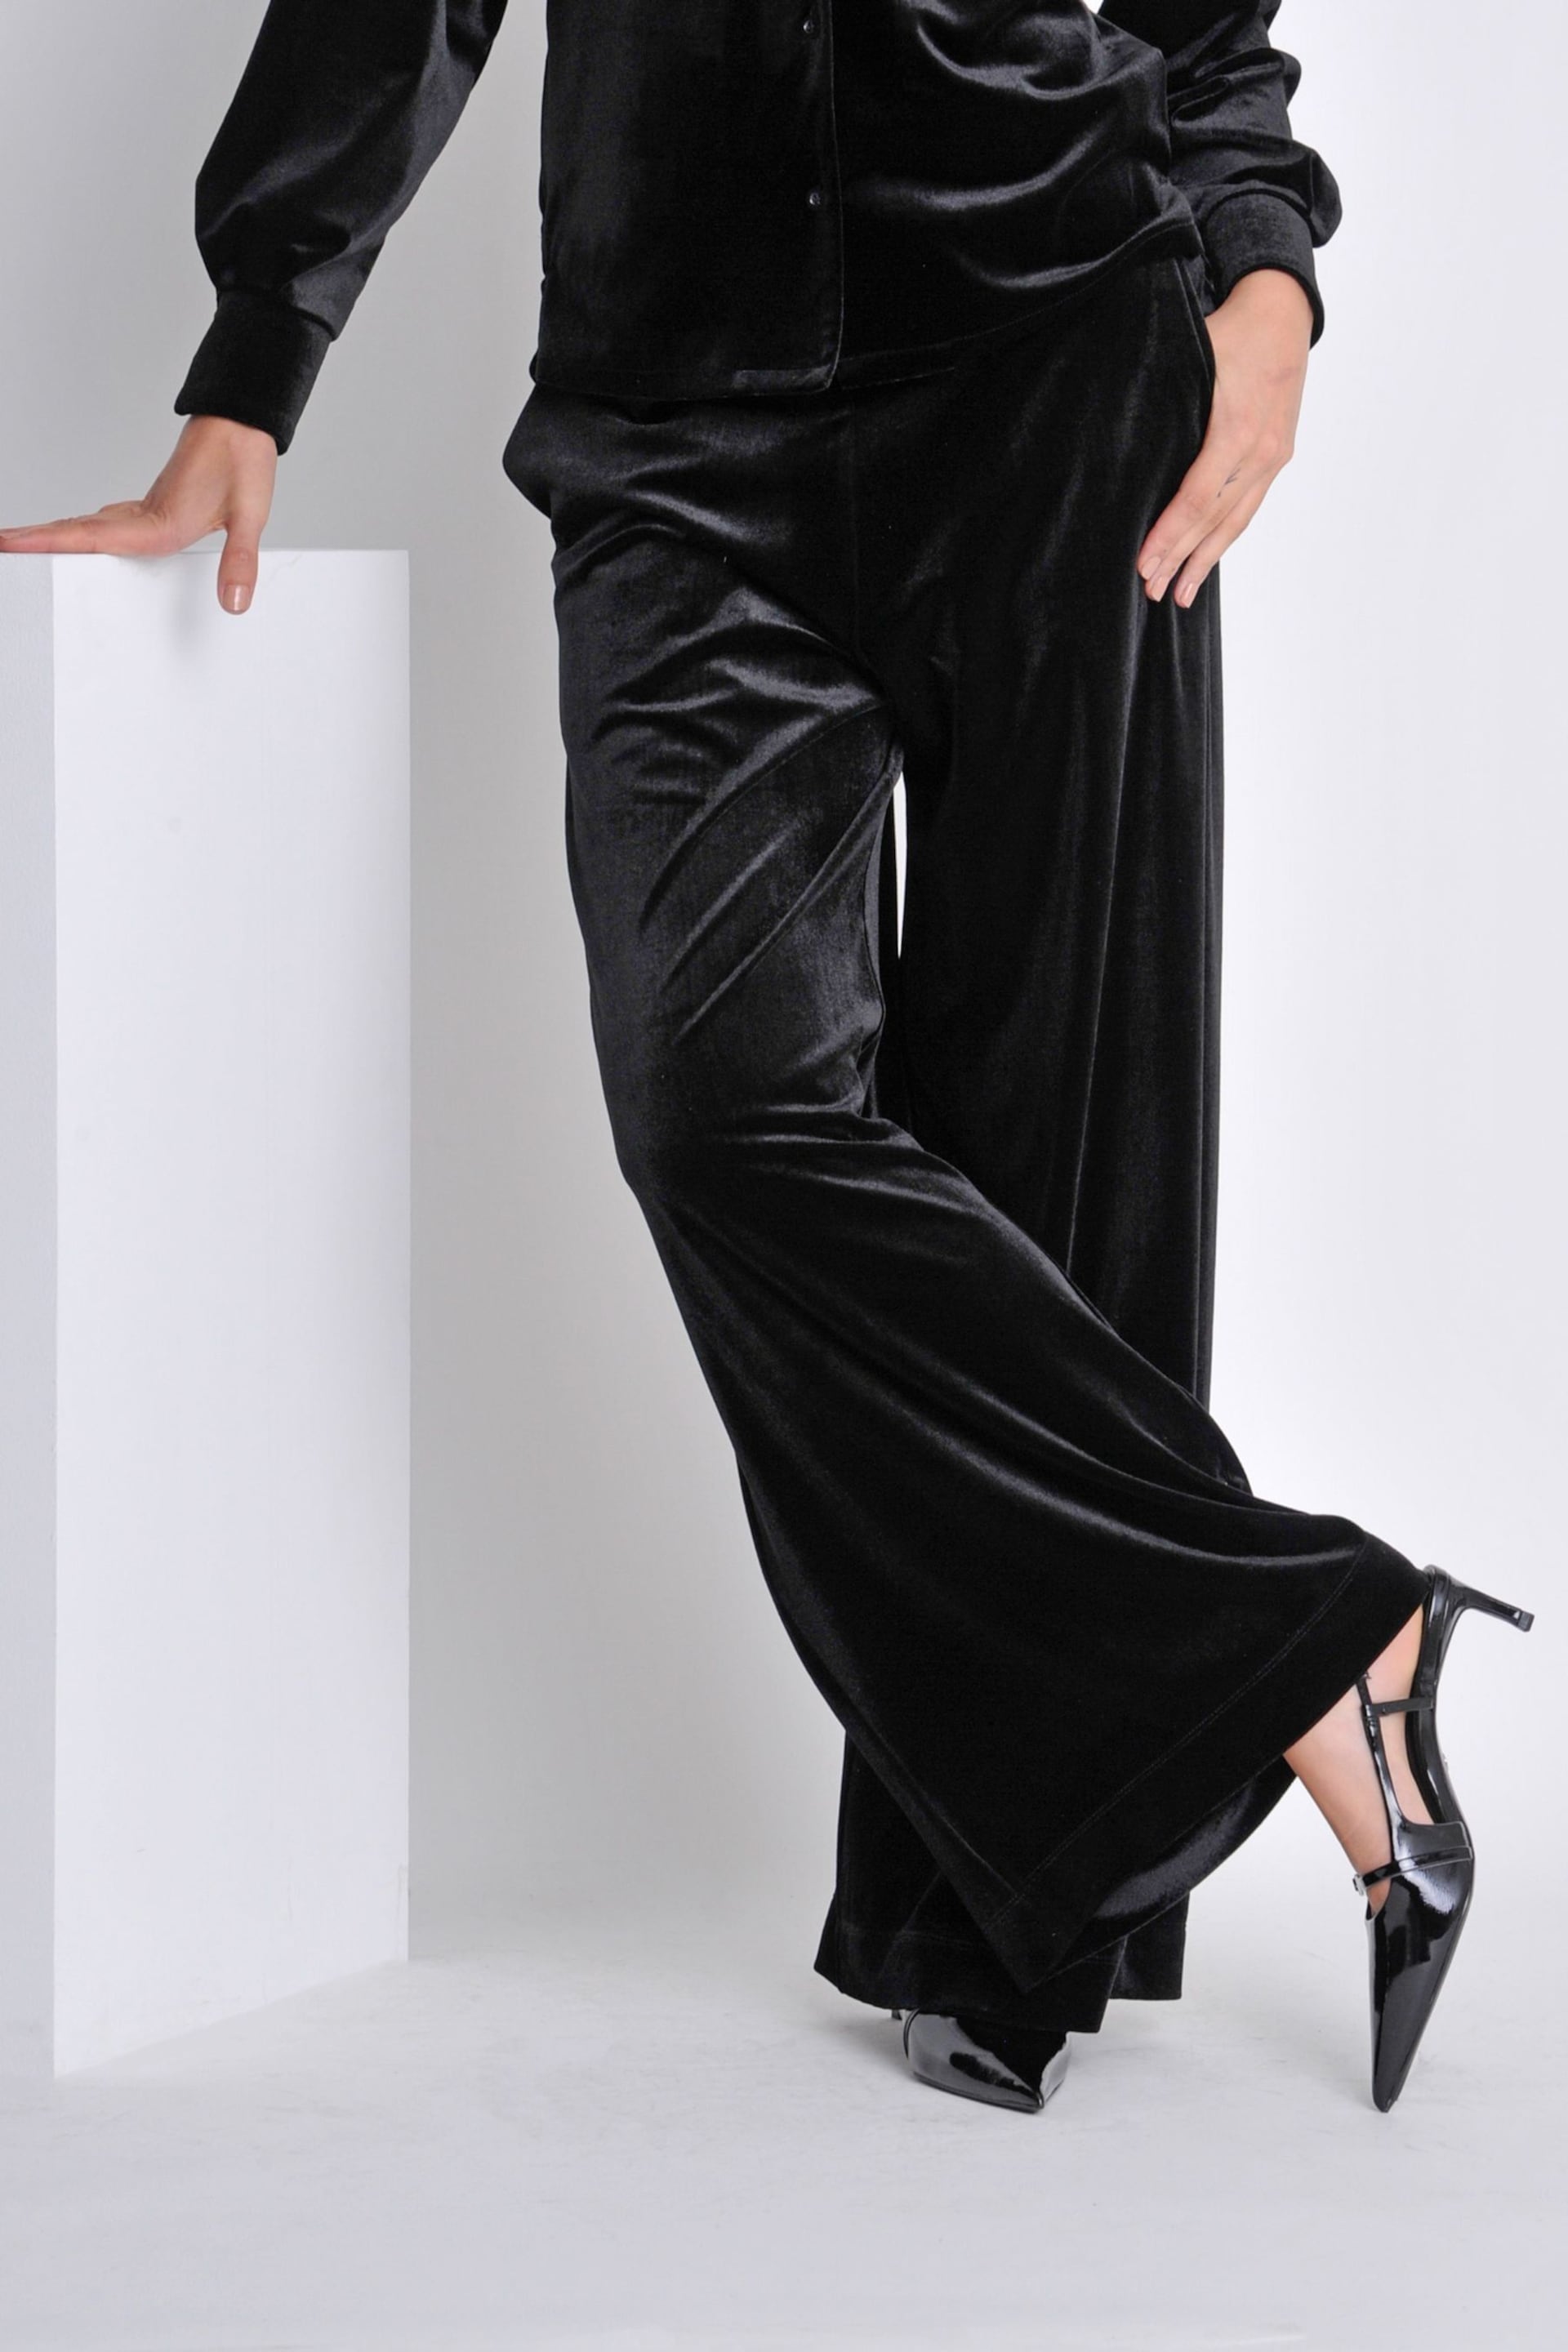 Burgs Womens Malmsmead Wide Leg Velvet Pull on Black Trousers - Image 3 of 5